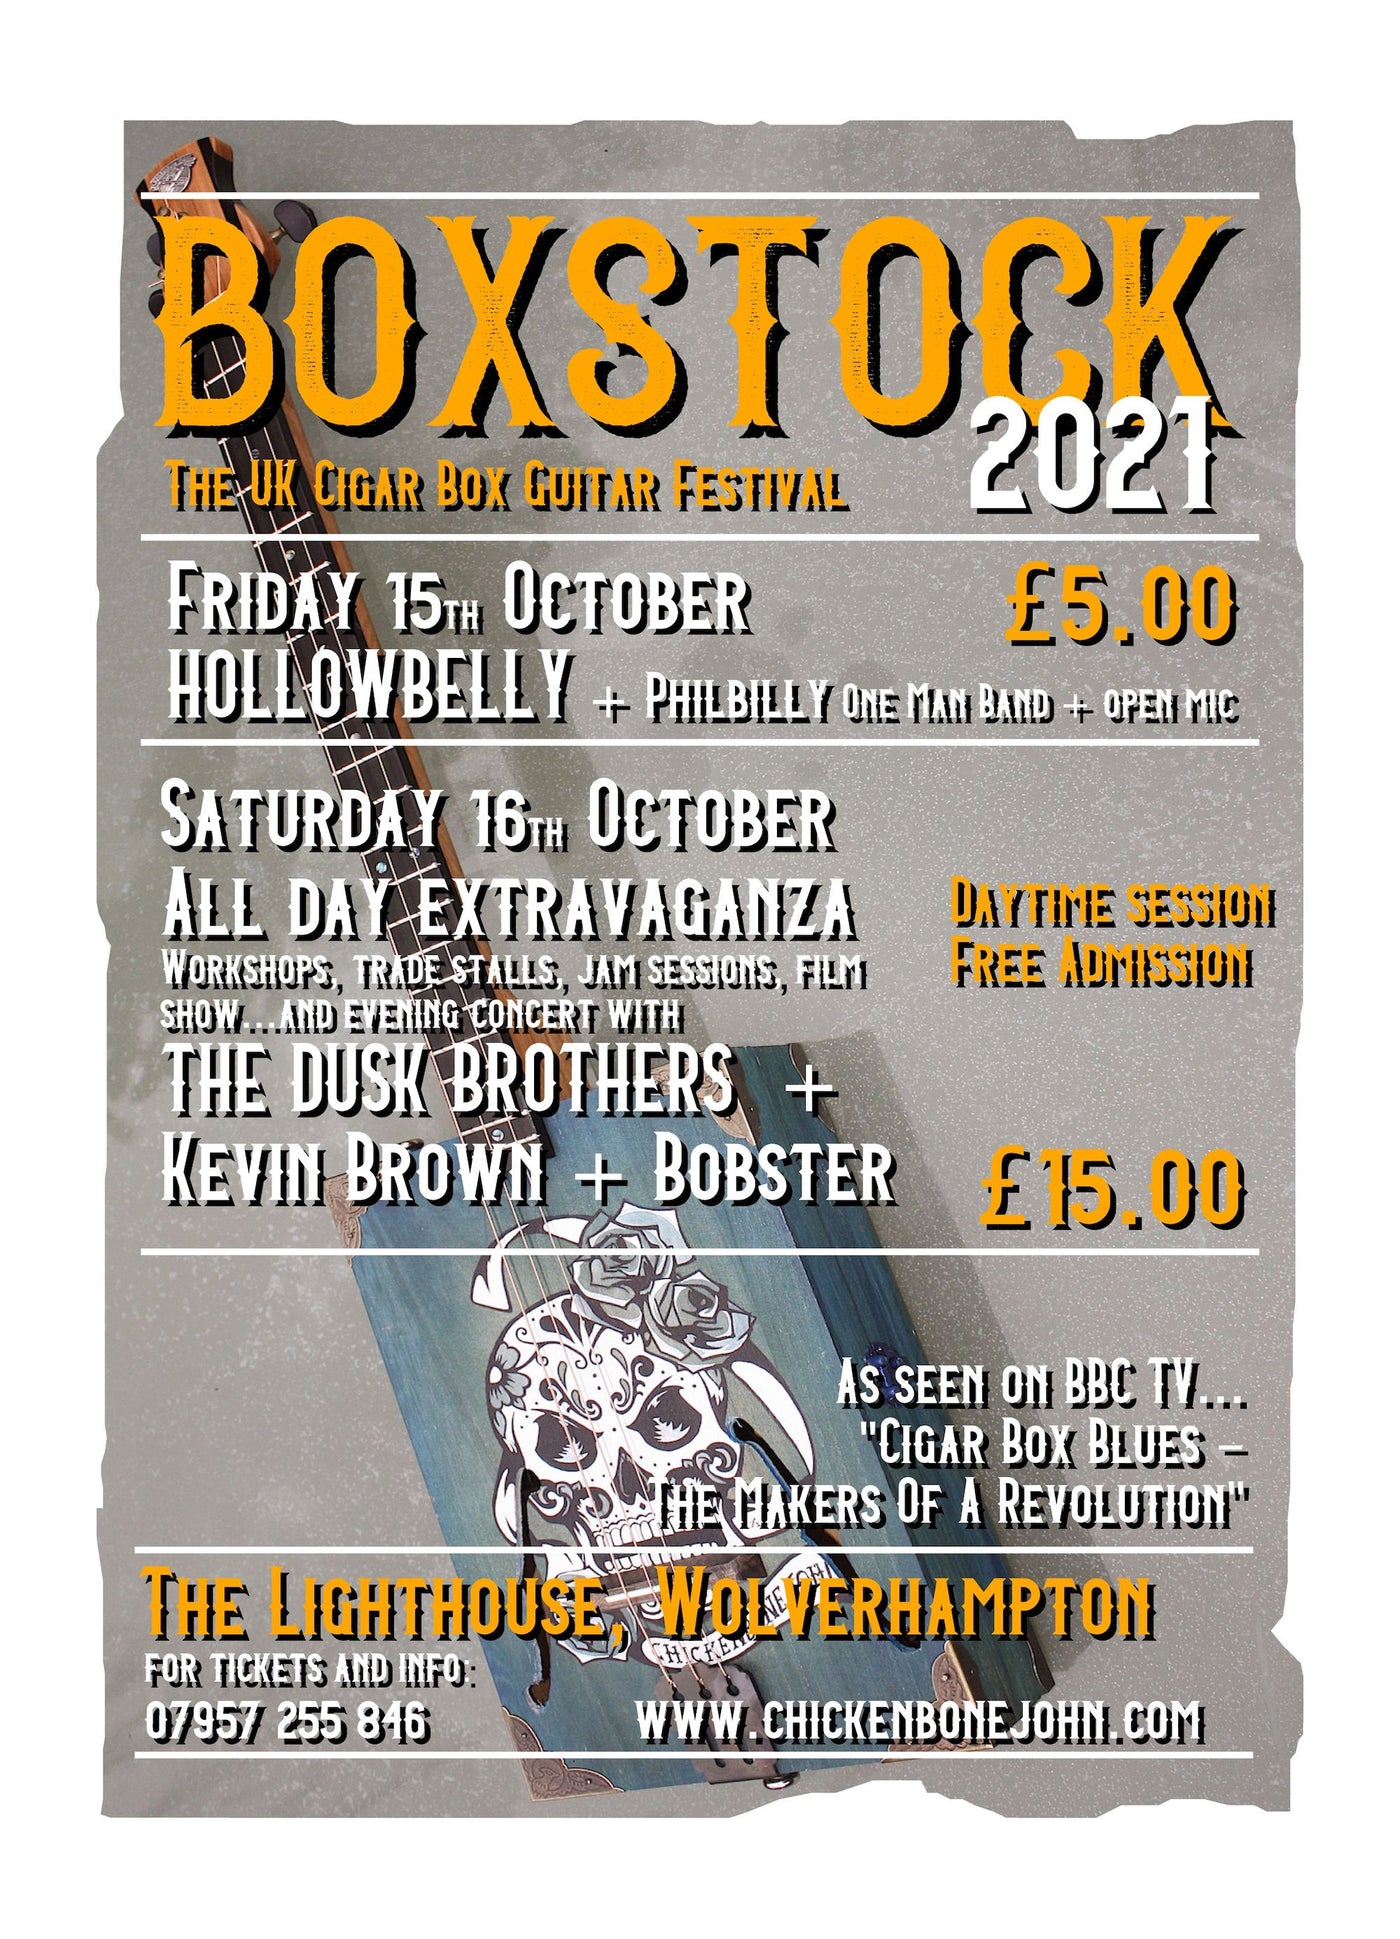 BOXSTOCK, THE UK  CIGAR BOX GUITAR FESTIVAL - A BRIEF HISTORY